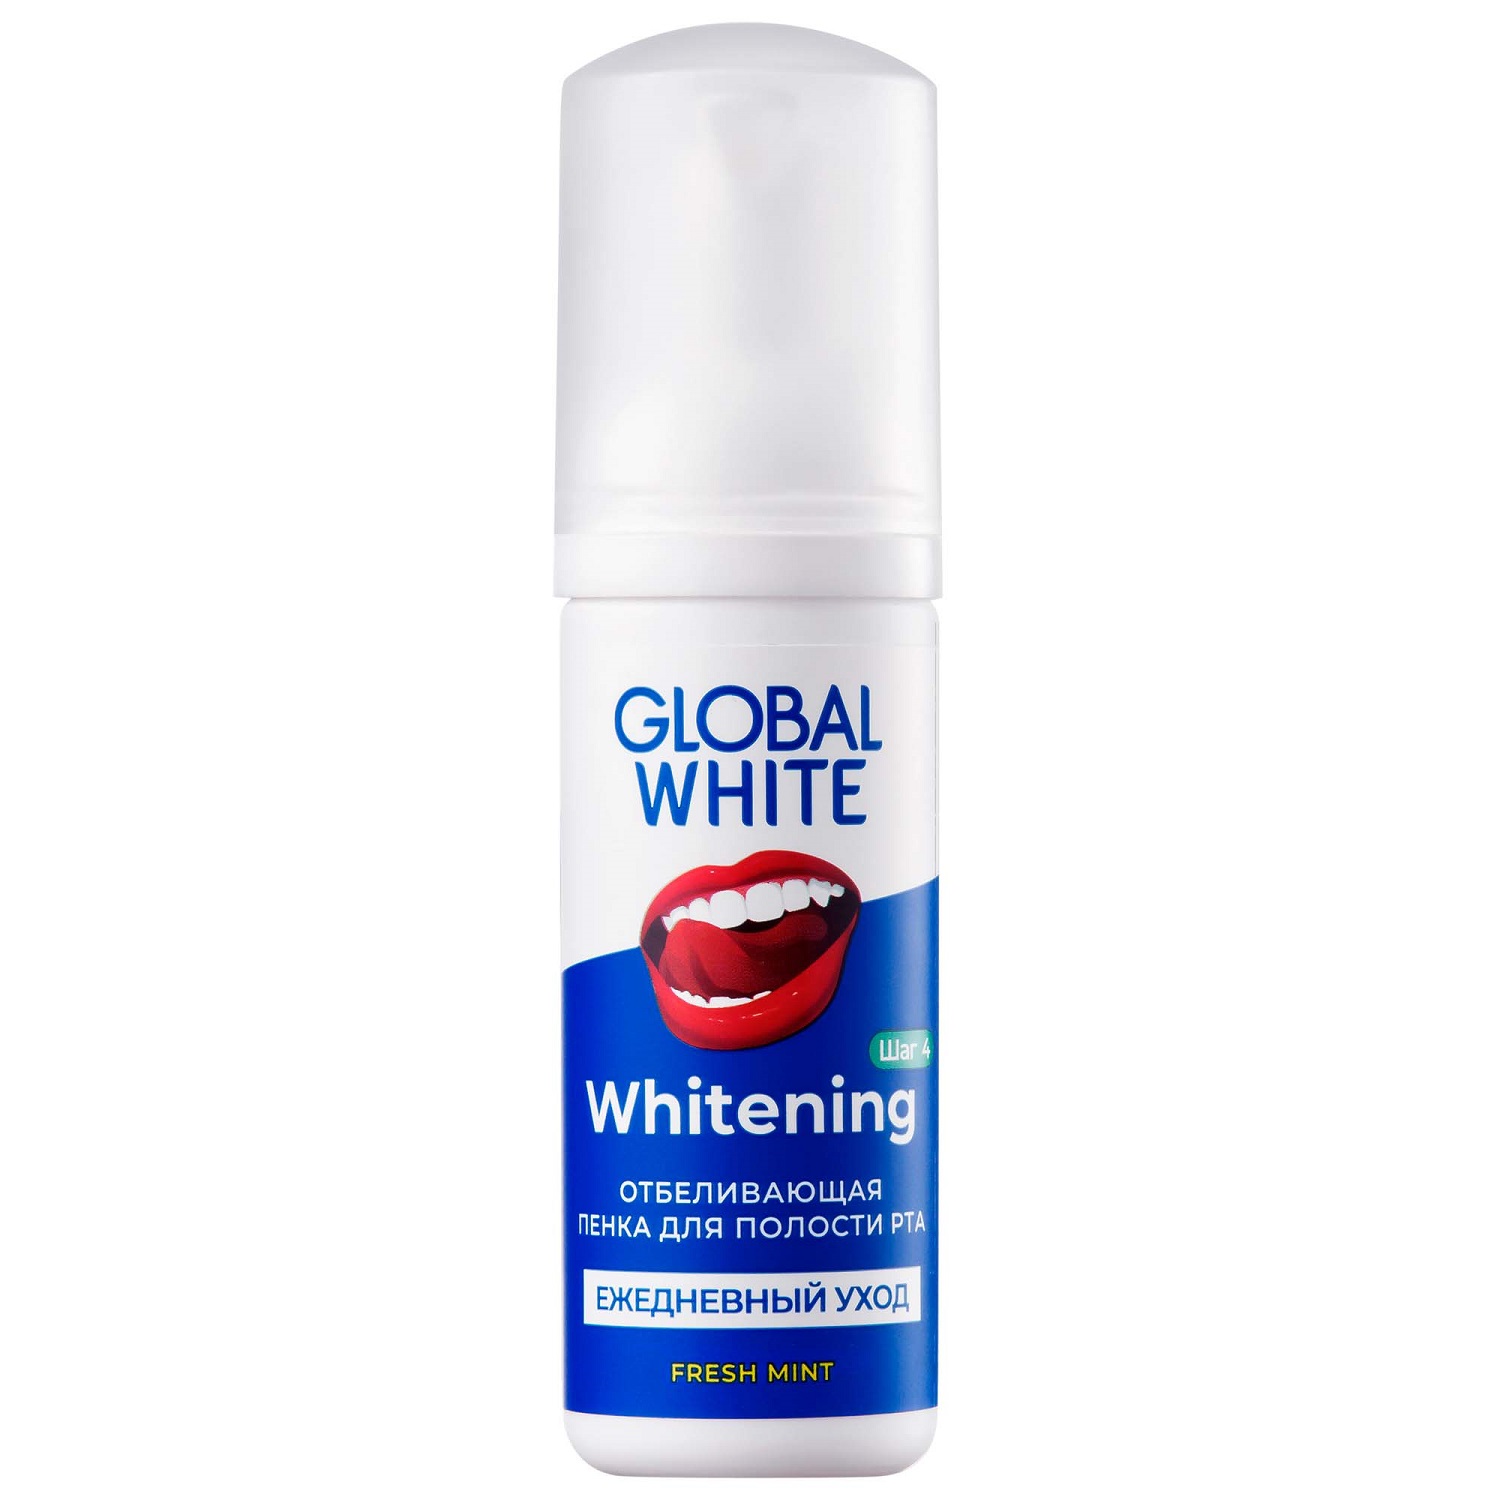 Купить Global White Отбеливающая пенка для полости рта Whitening Foam Oral Care, 50 мл (Global White, Спреи и пенки), Италия